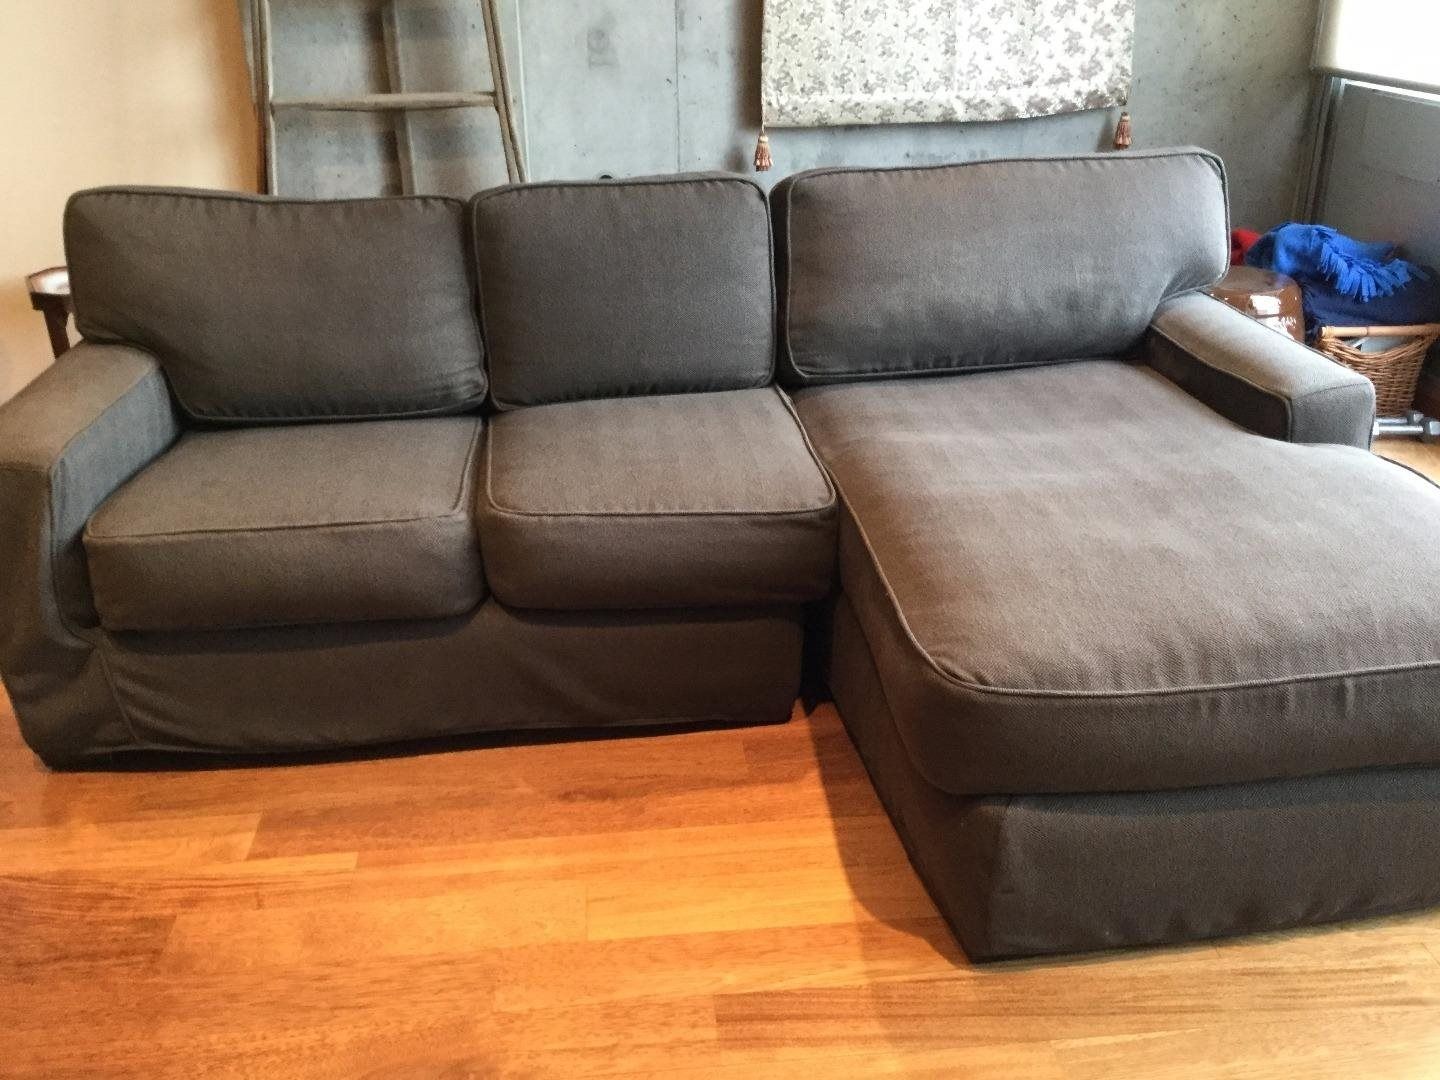 Quatrine Upholstered Sectional Sofa: For Sale In San Francisco, Ca Regarding Quatrine Sectional Sofas (View 3 of 10)